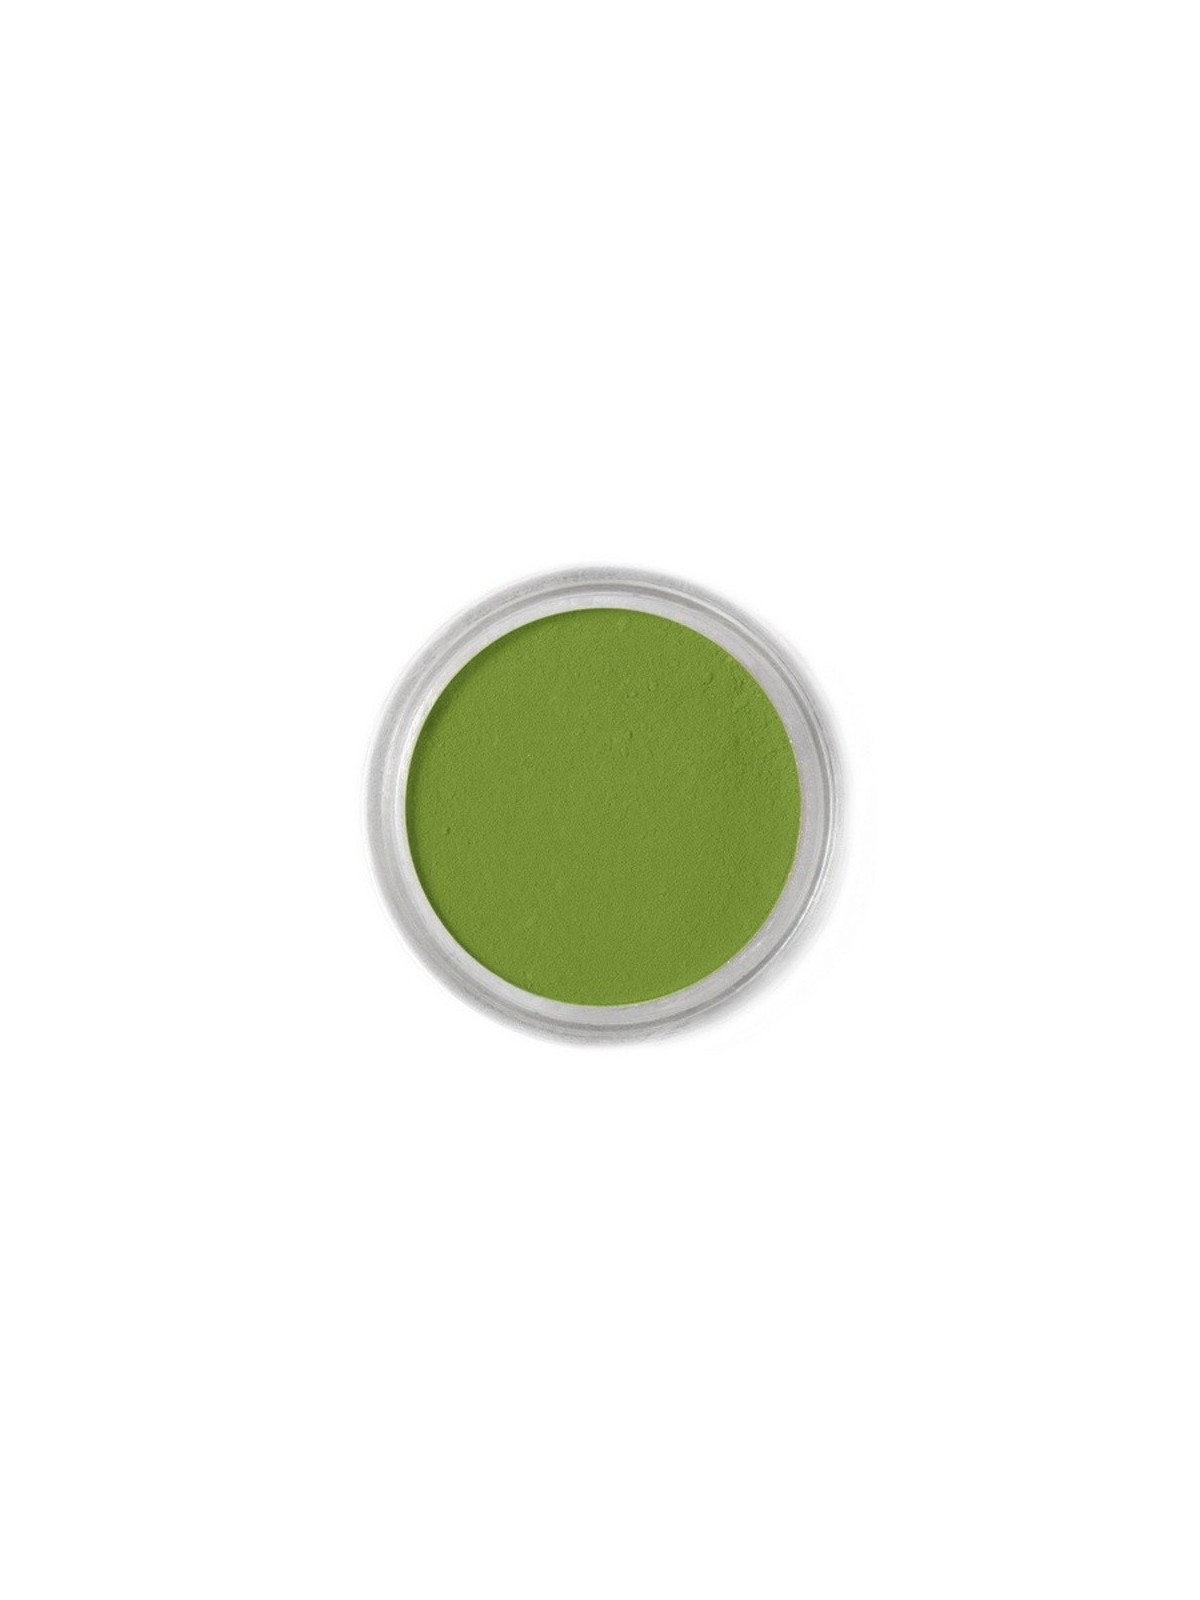 Jadalna farba proszkowa Fractal - Moss Green (1,6 g)